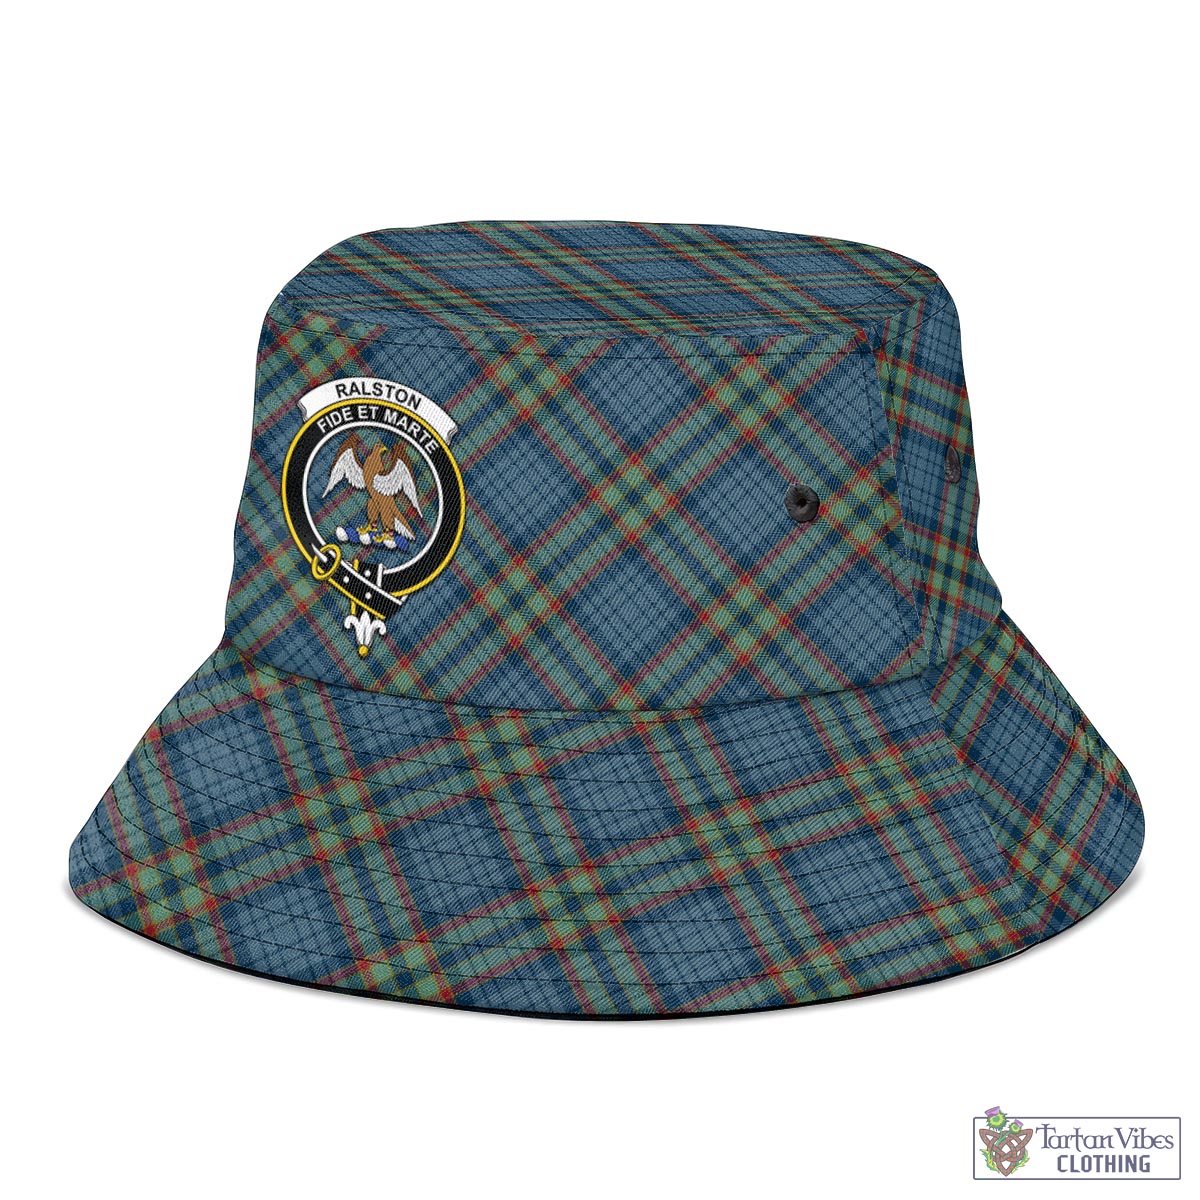 Tartan Vibes Clothing Ralston UK Tartan Bucket Hat with Family Crest